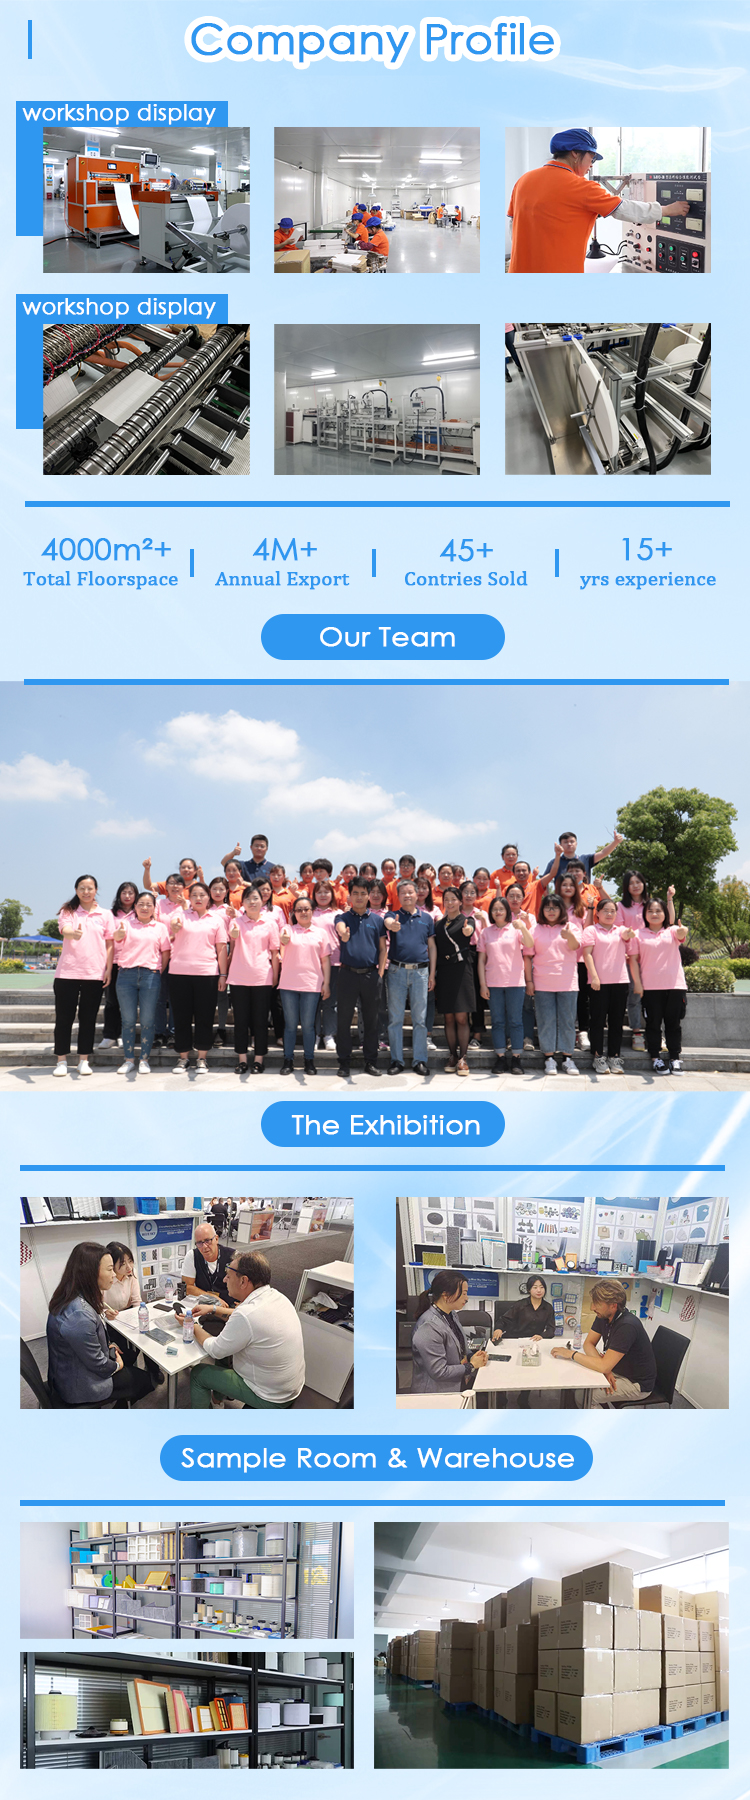 Our Company Profile Nanjing Blue Sky Filter Co., Ltd.